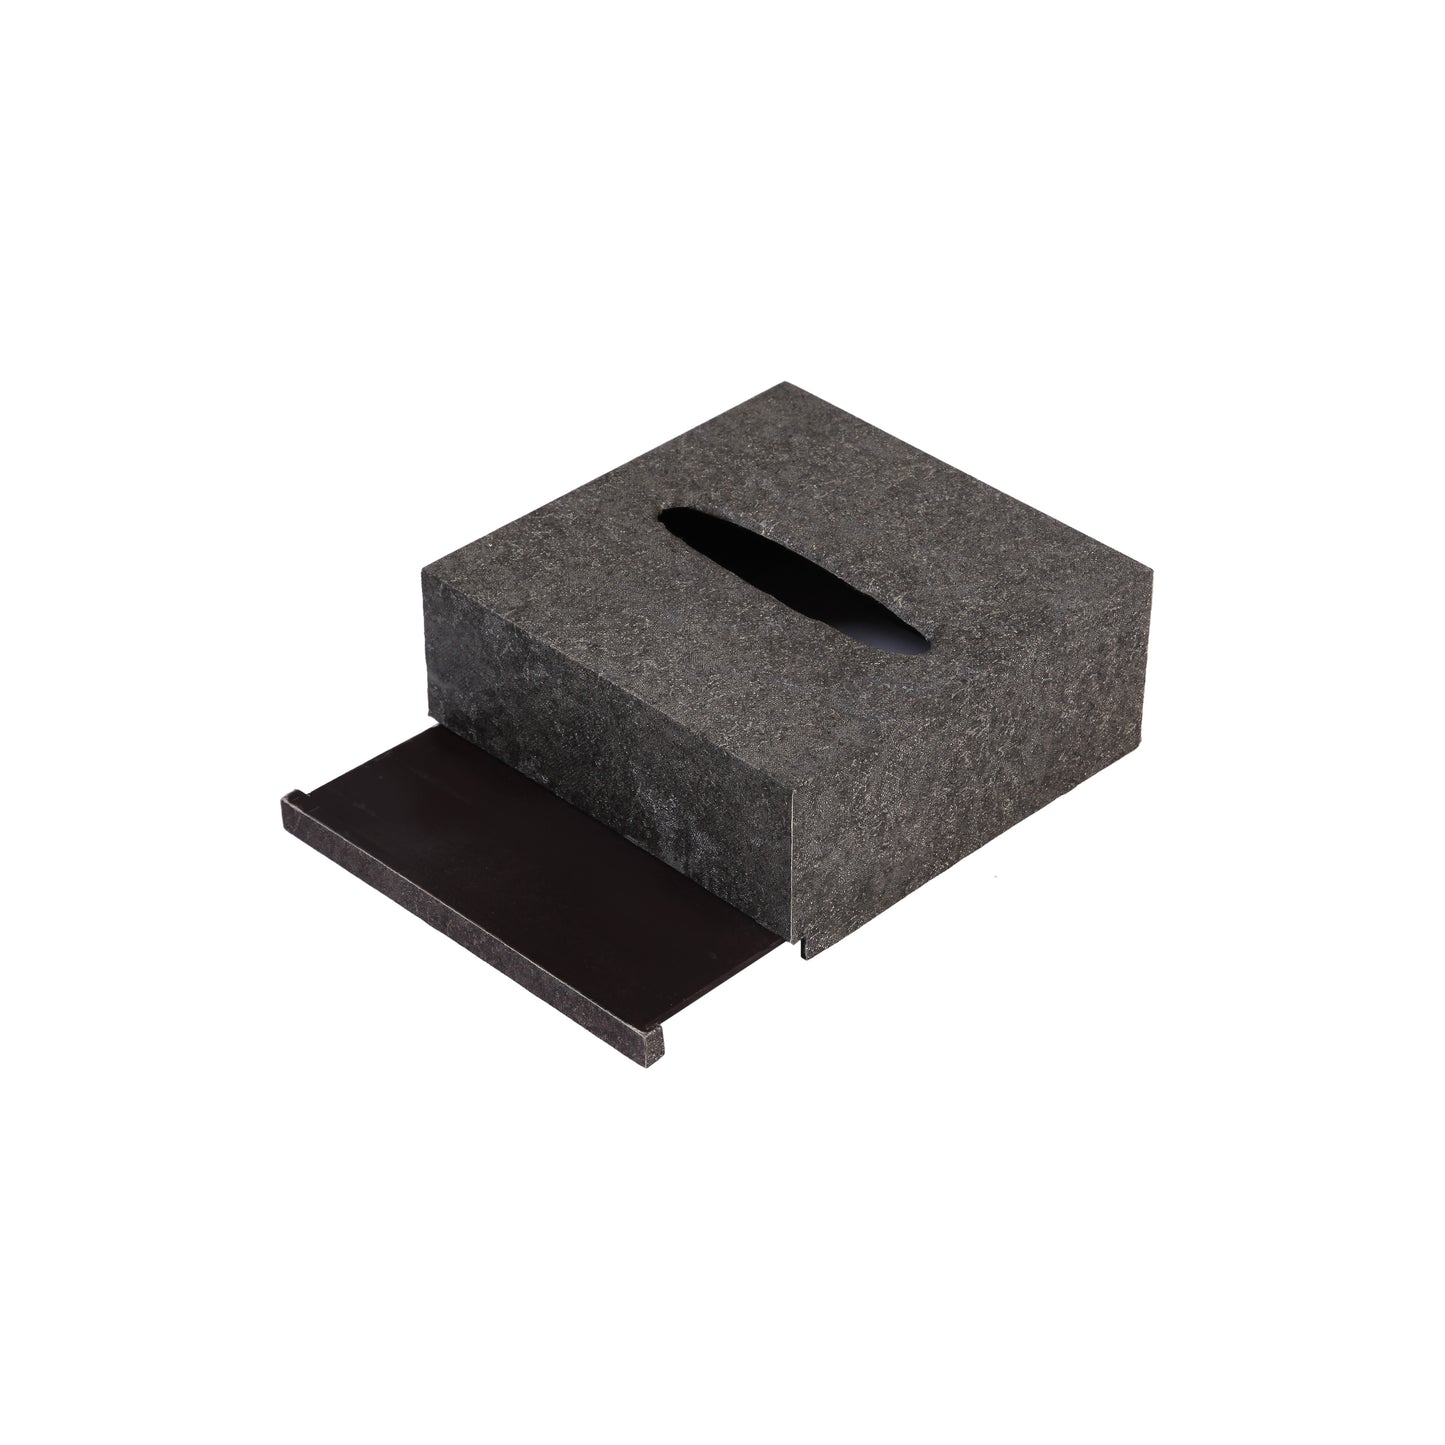 A Tiny Mistake Metallic Charcoal Square Tissue Box, 18 x 18 x 7.5 cm